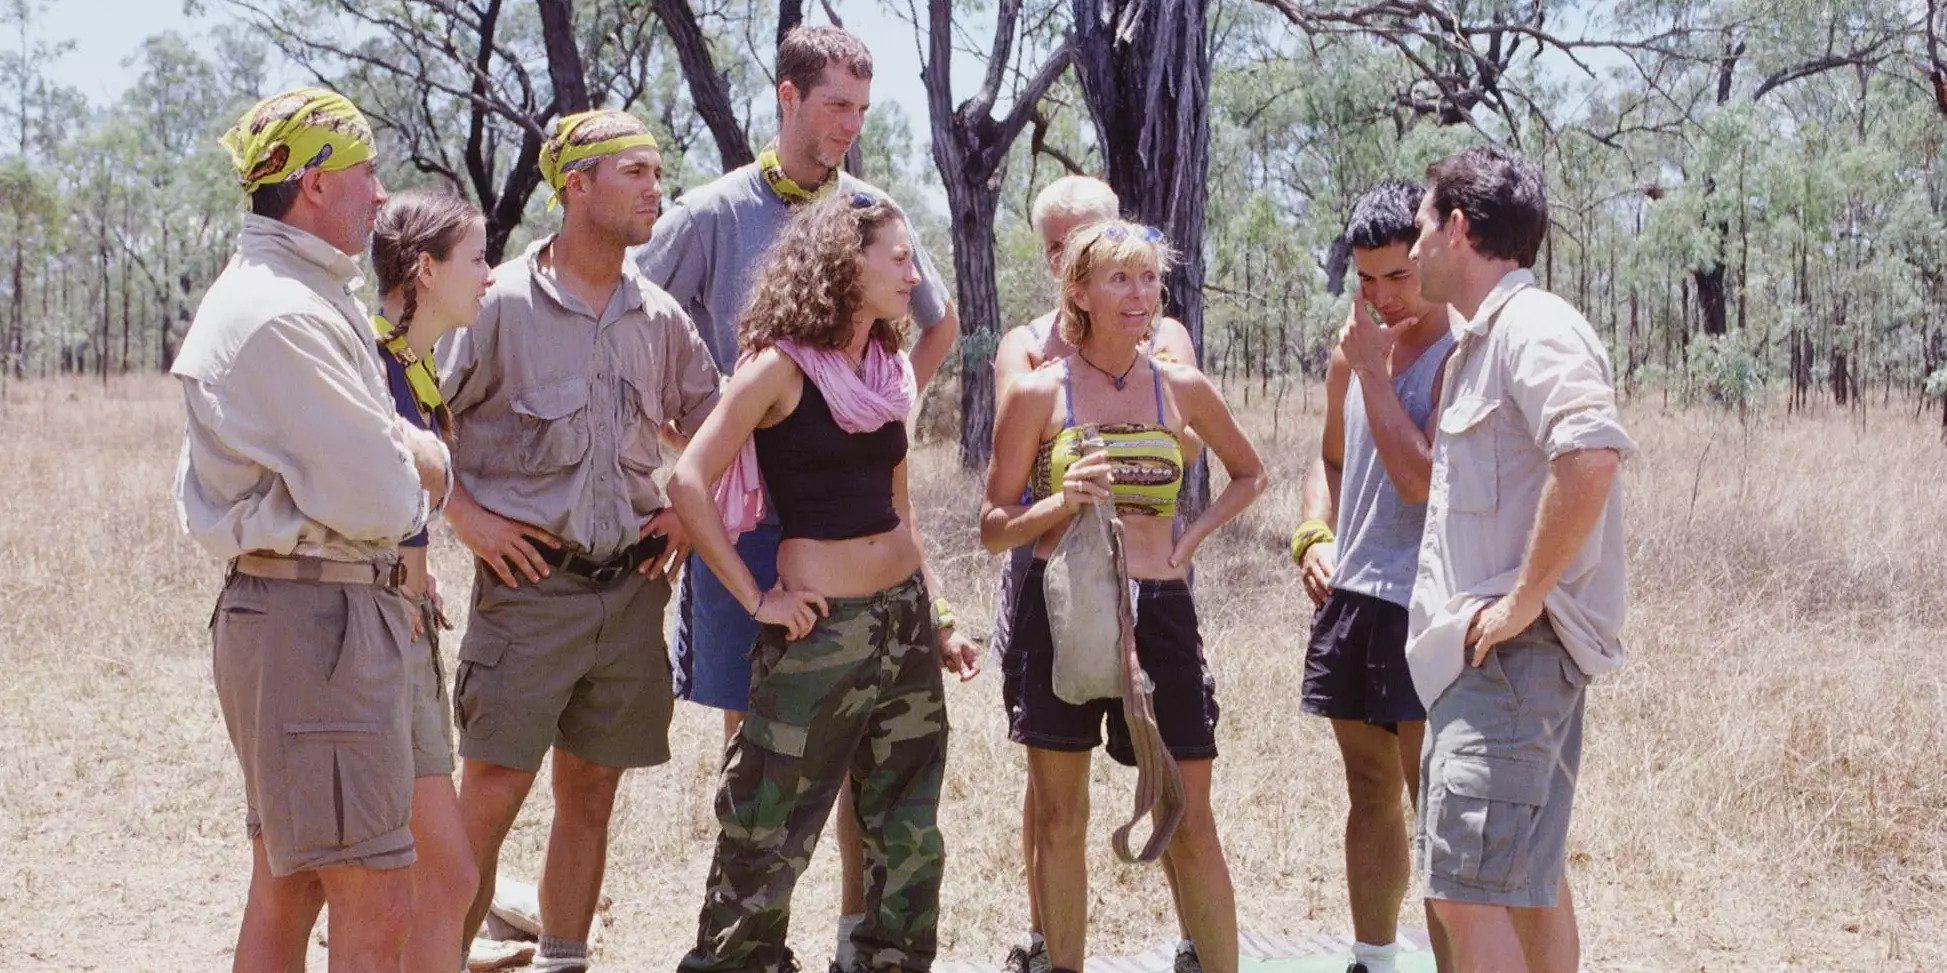 A still from Survivor's second season, The Australian Outback